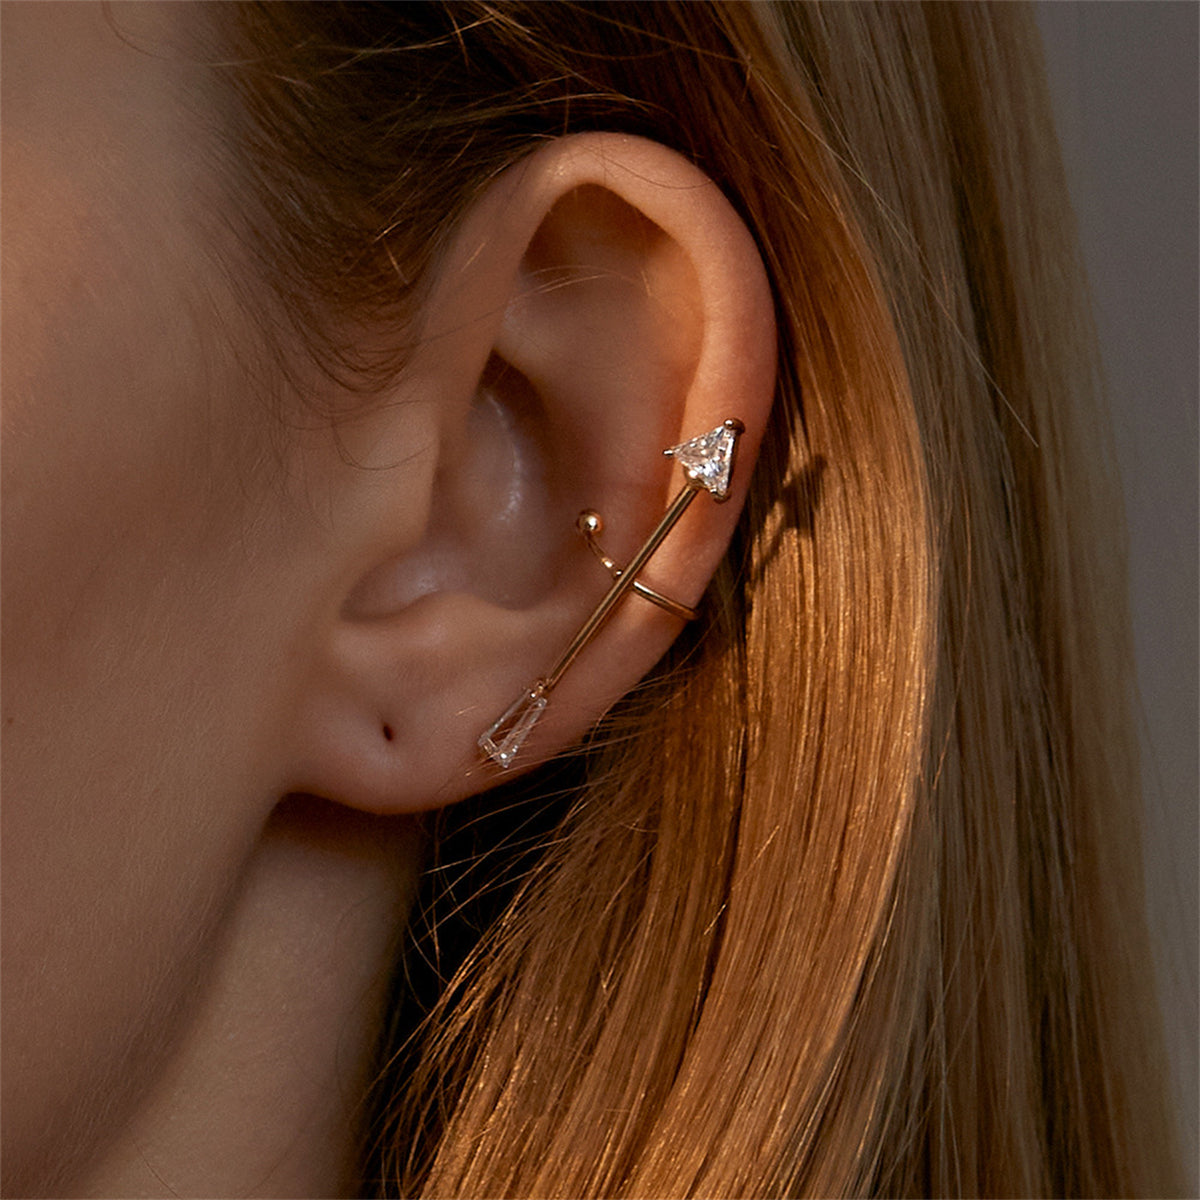 Crystal & 18K Gold-Plated Arrow Ear Cuff